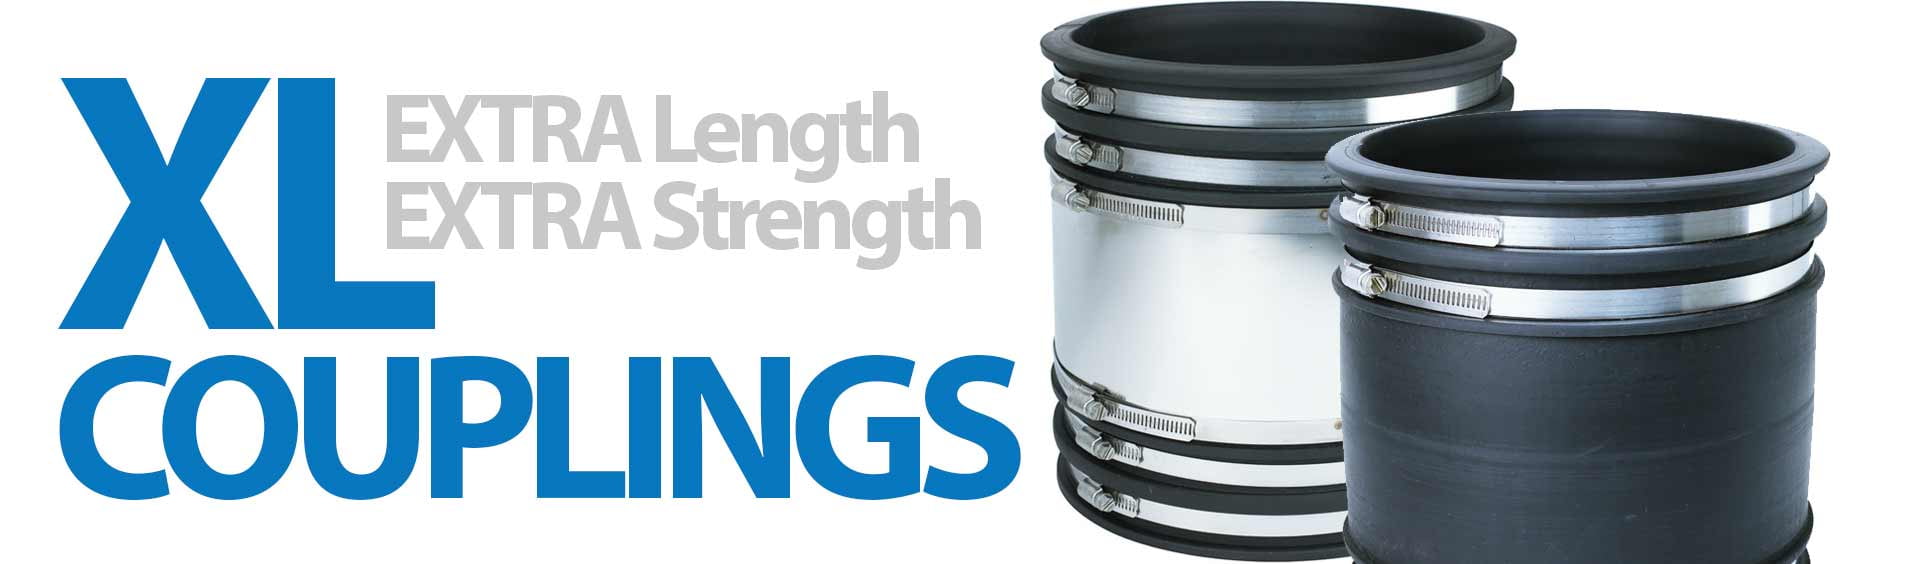 Fernco XL Couplings - Extra Length for Extra Strength